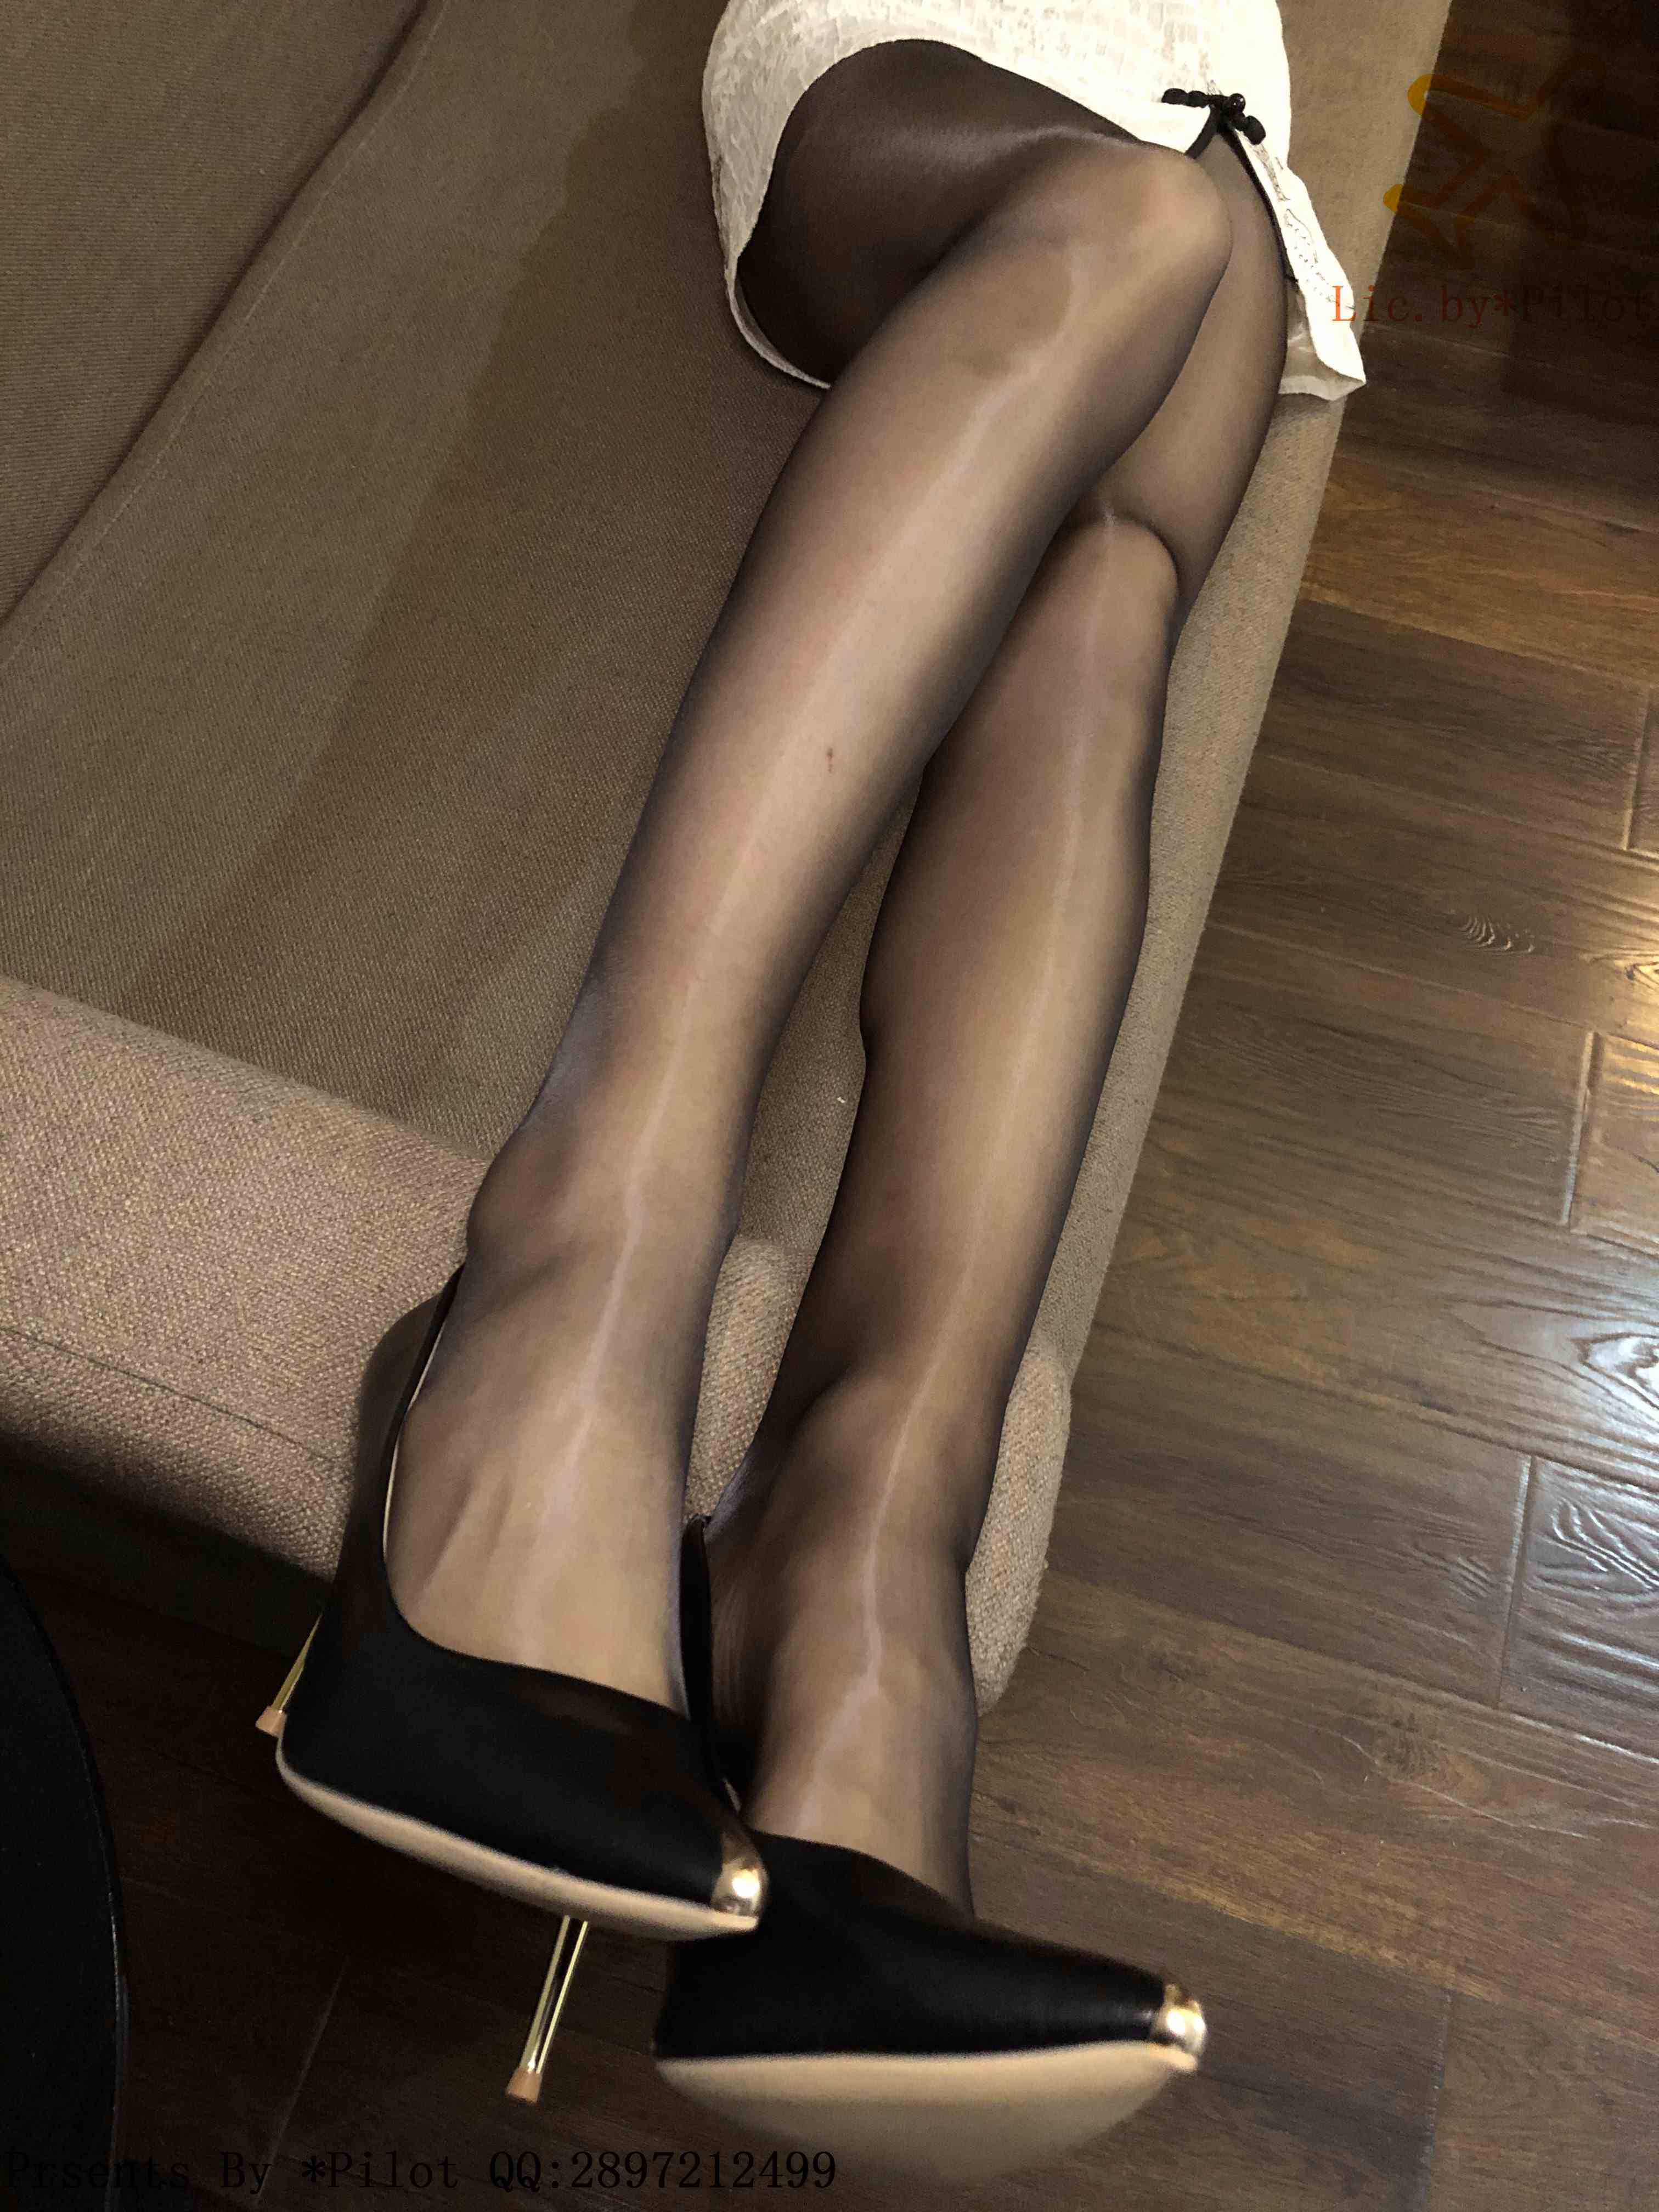 China Beauty Legs and feet 663